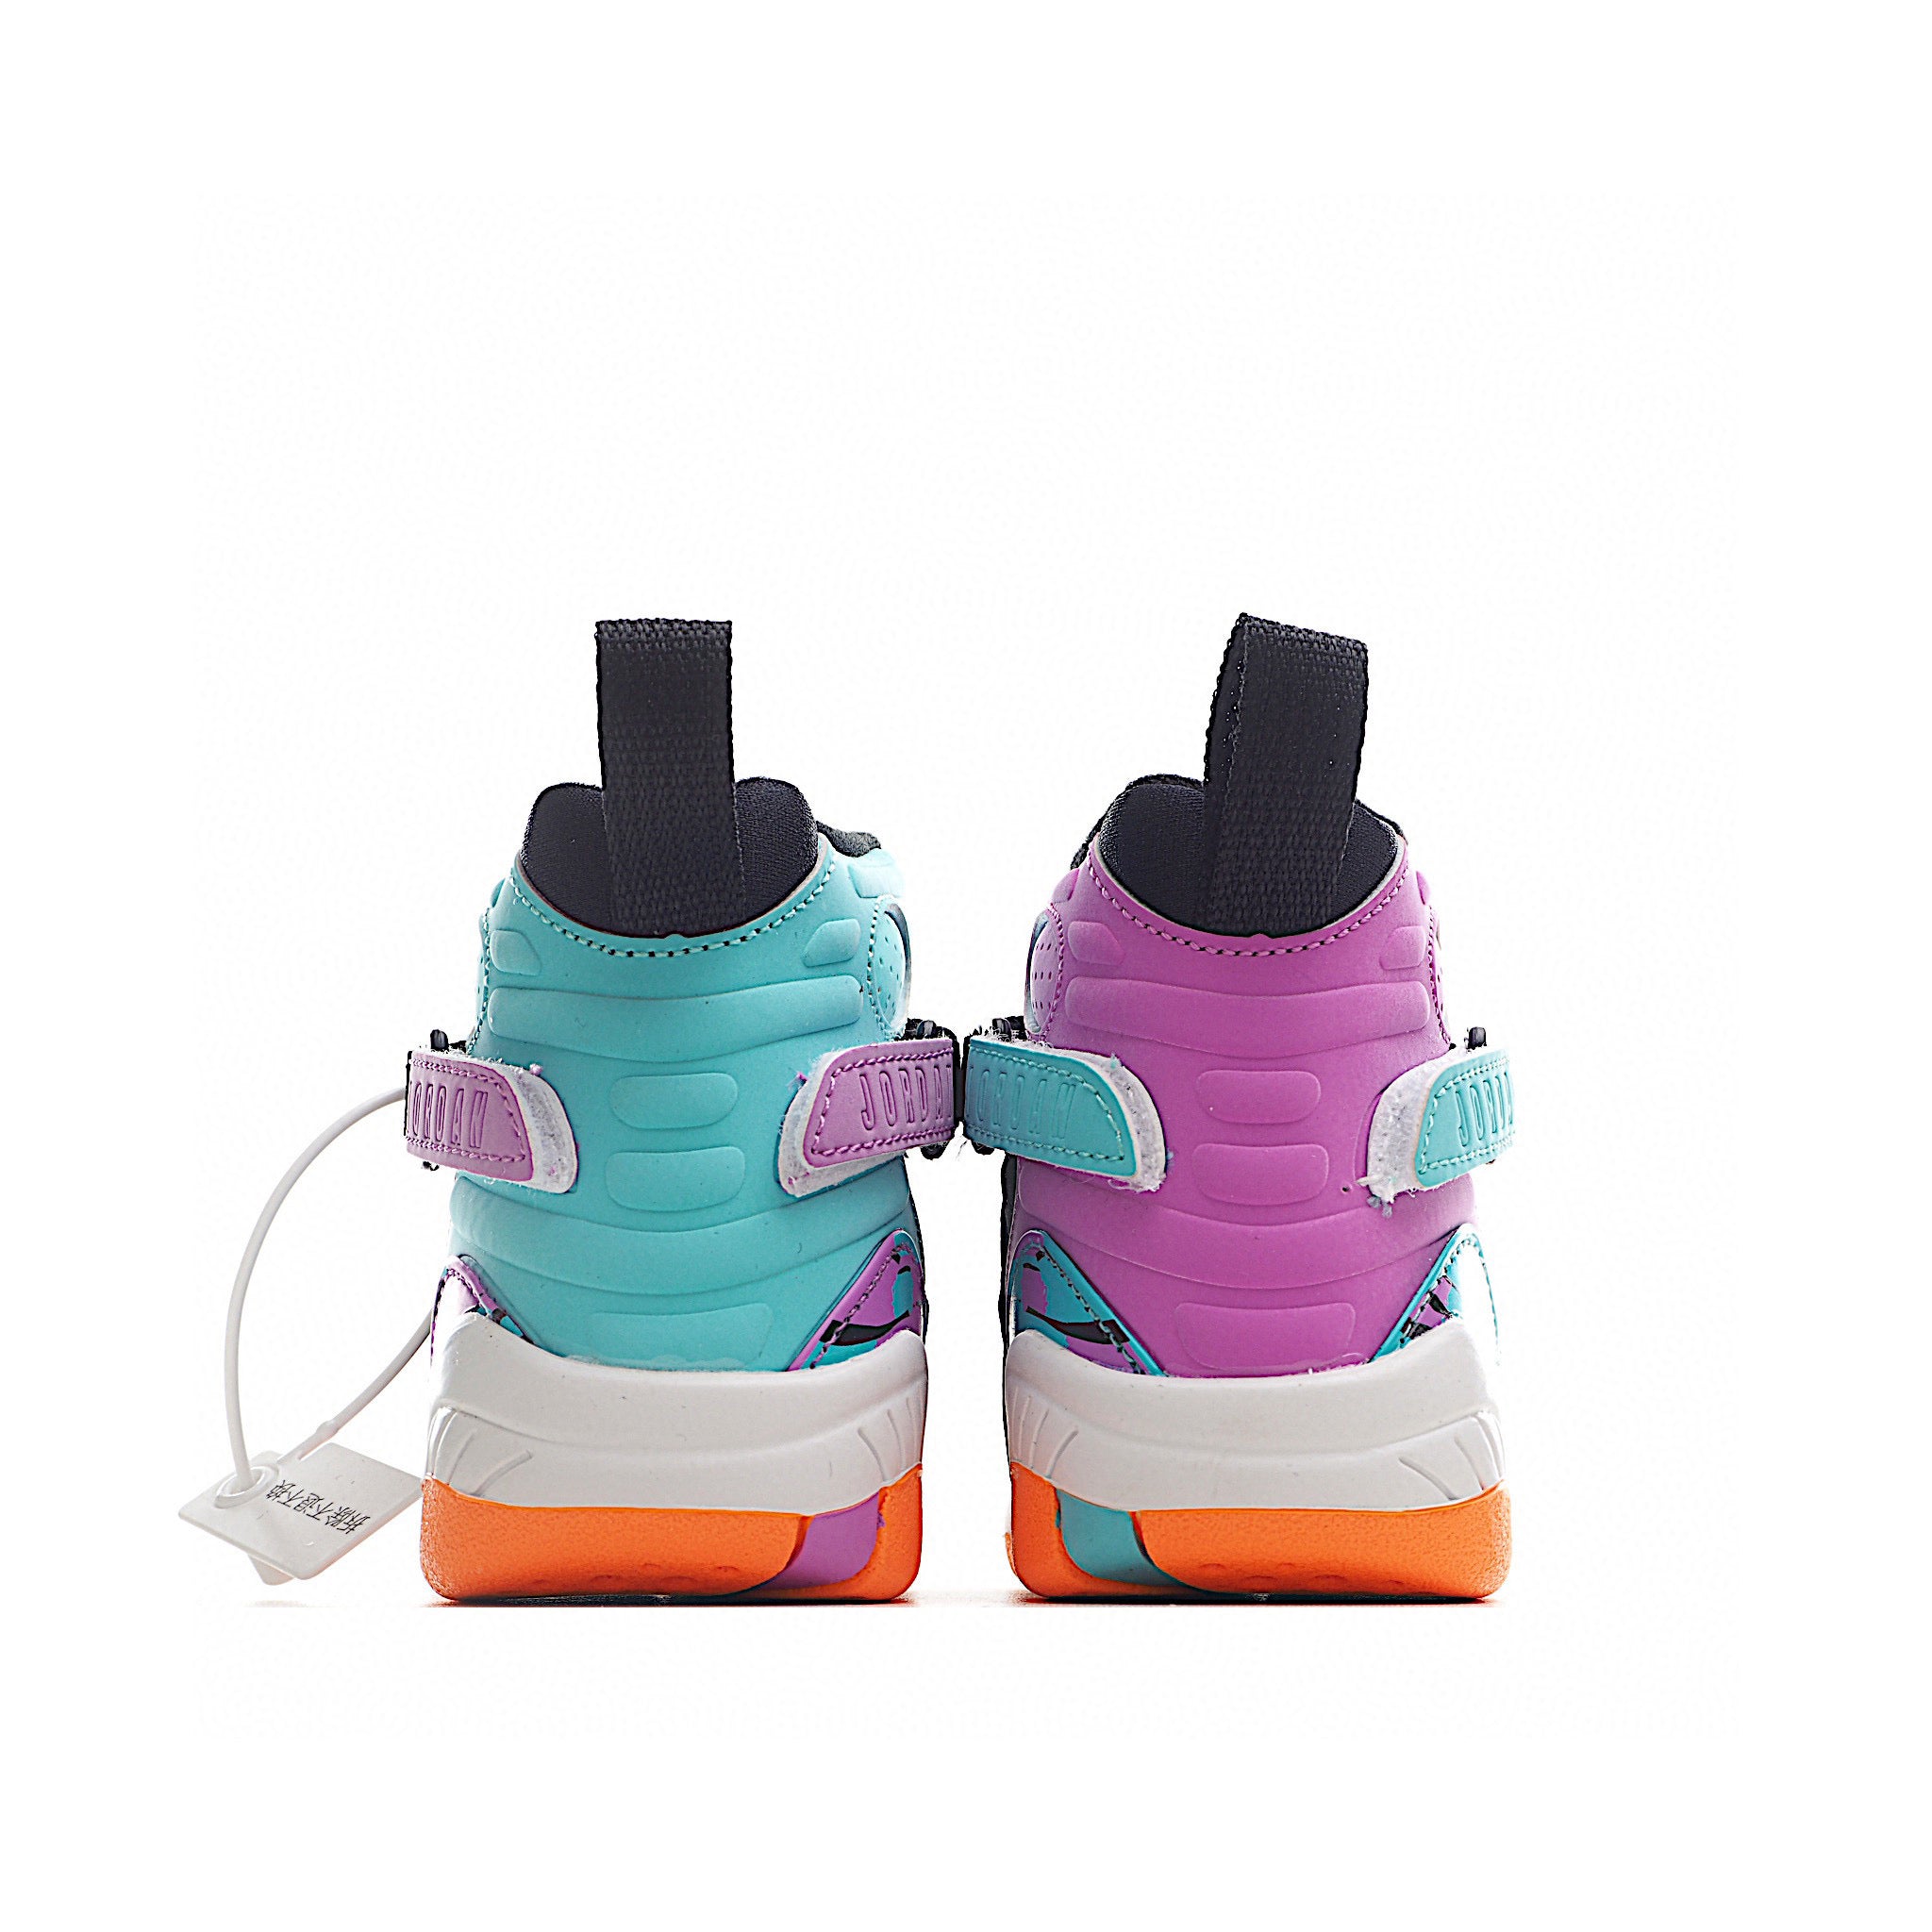 Nike air jordan 8 retro aqua violet chaussures